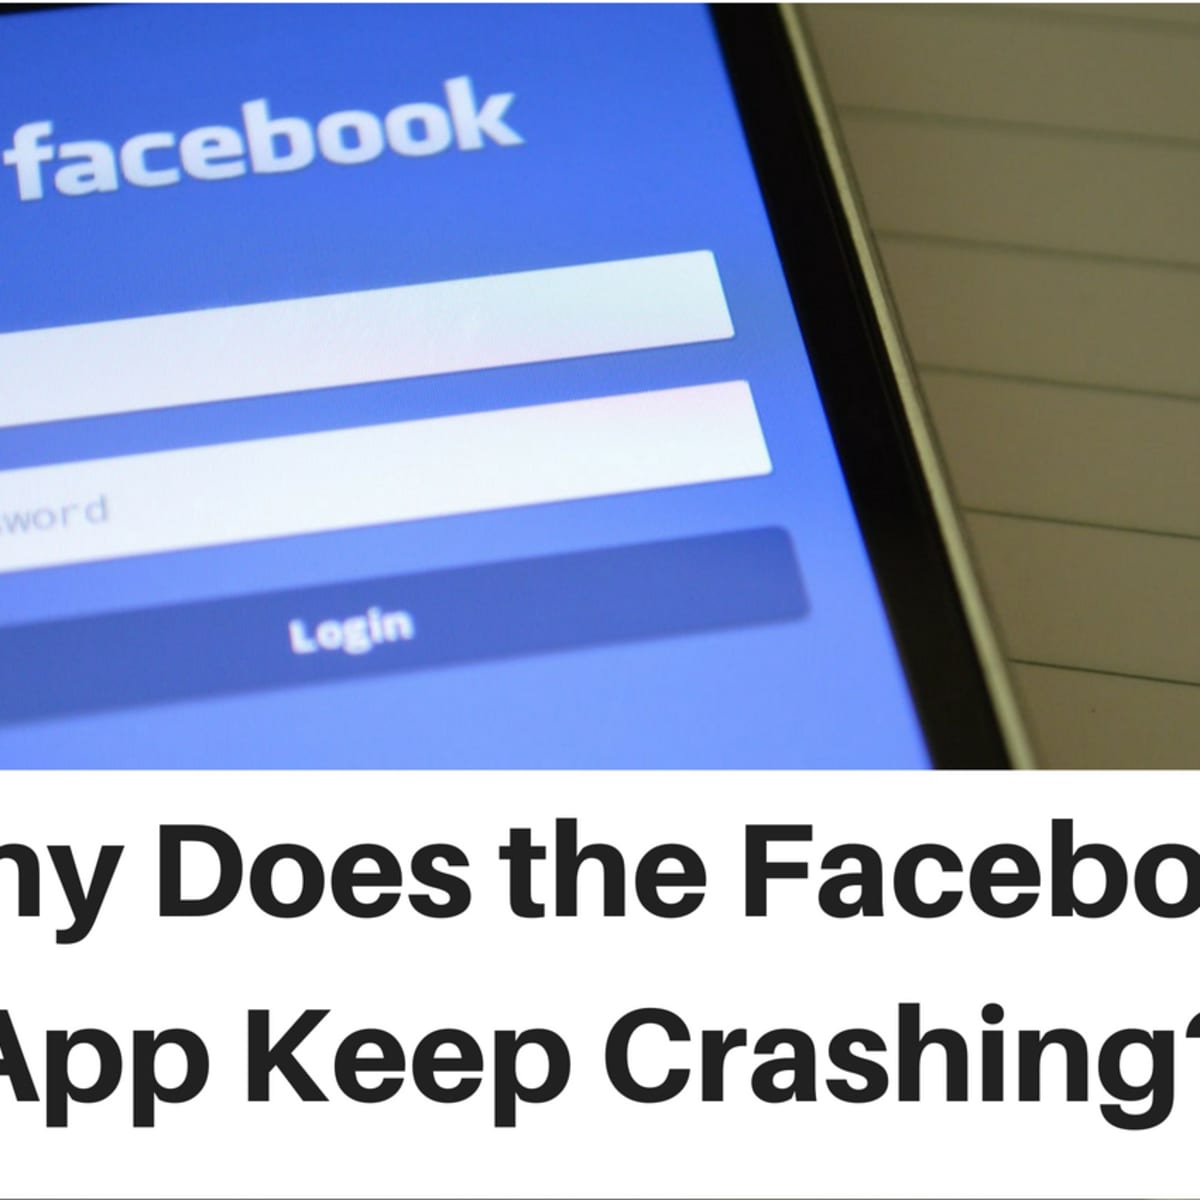 Facebook Login Crashes from Facebook App - iOS · Issue #490